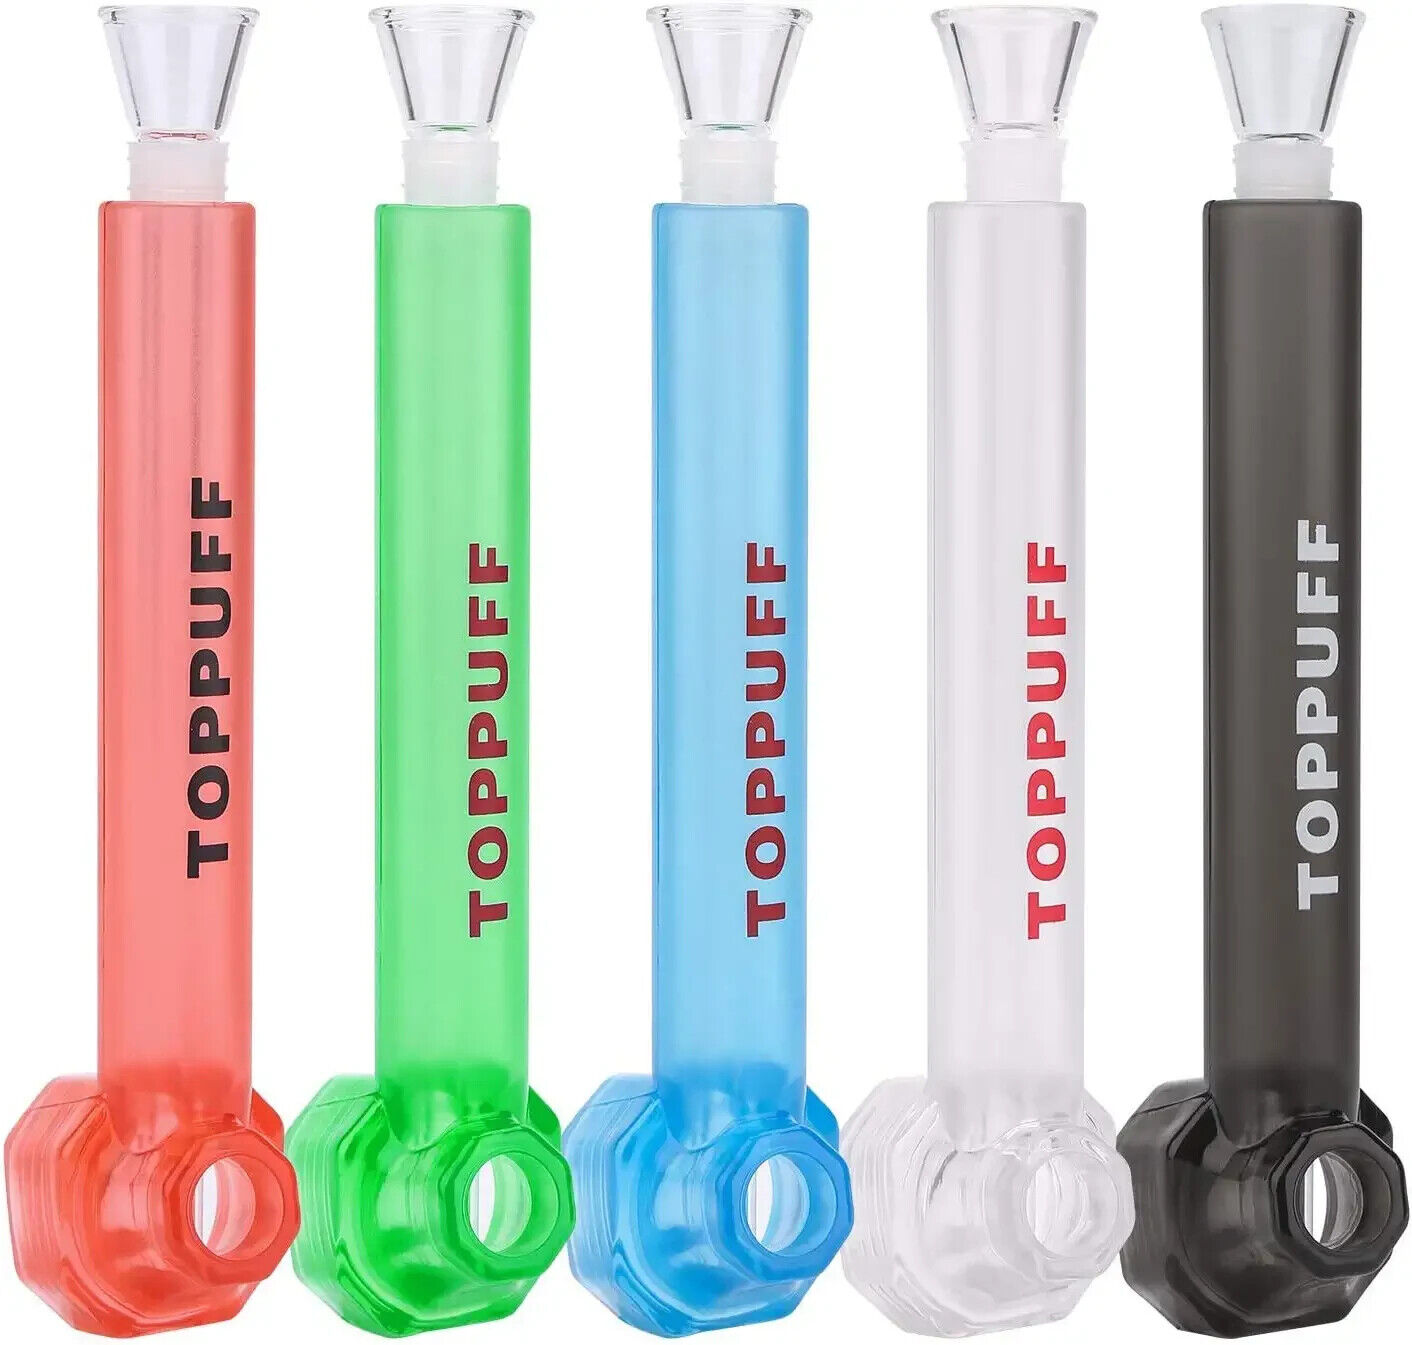 5 Units Random Colors Top Puff Premium Portable Hookah Bottle Water Glass Bong